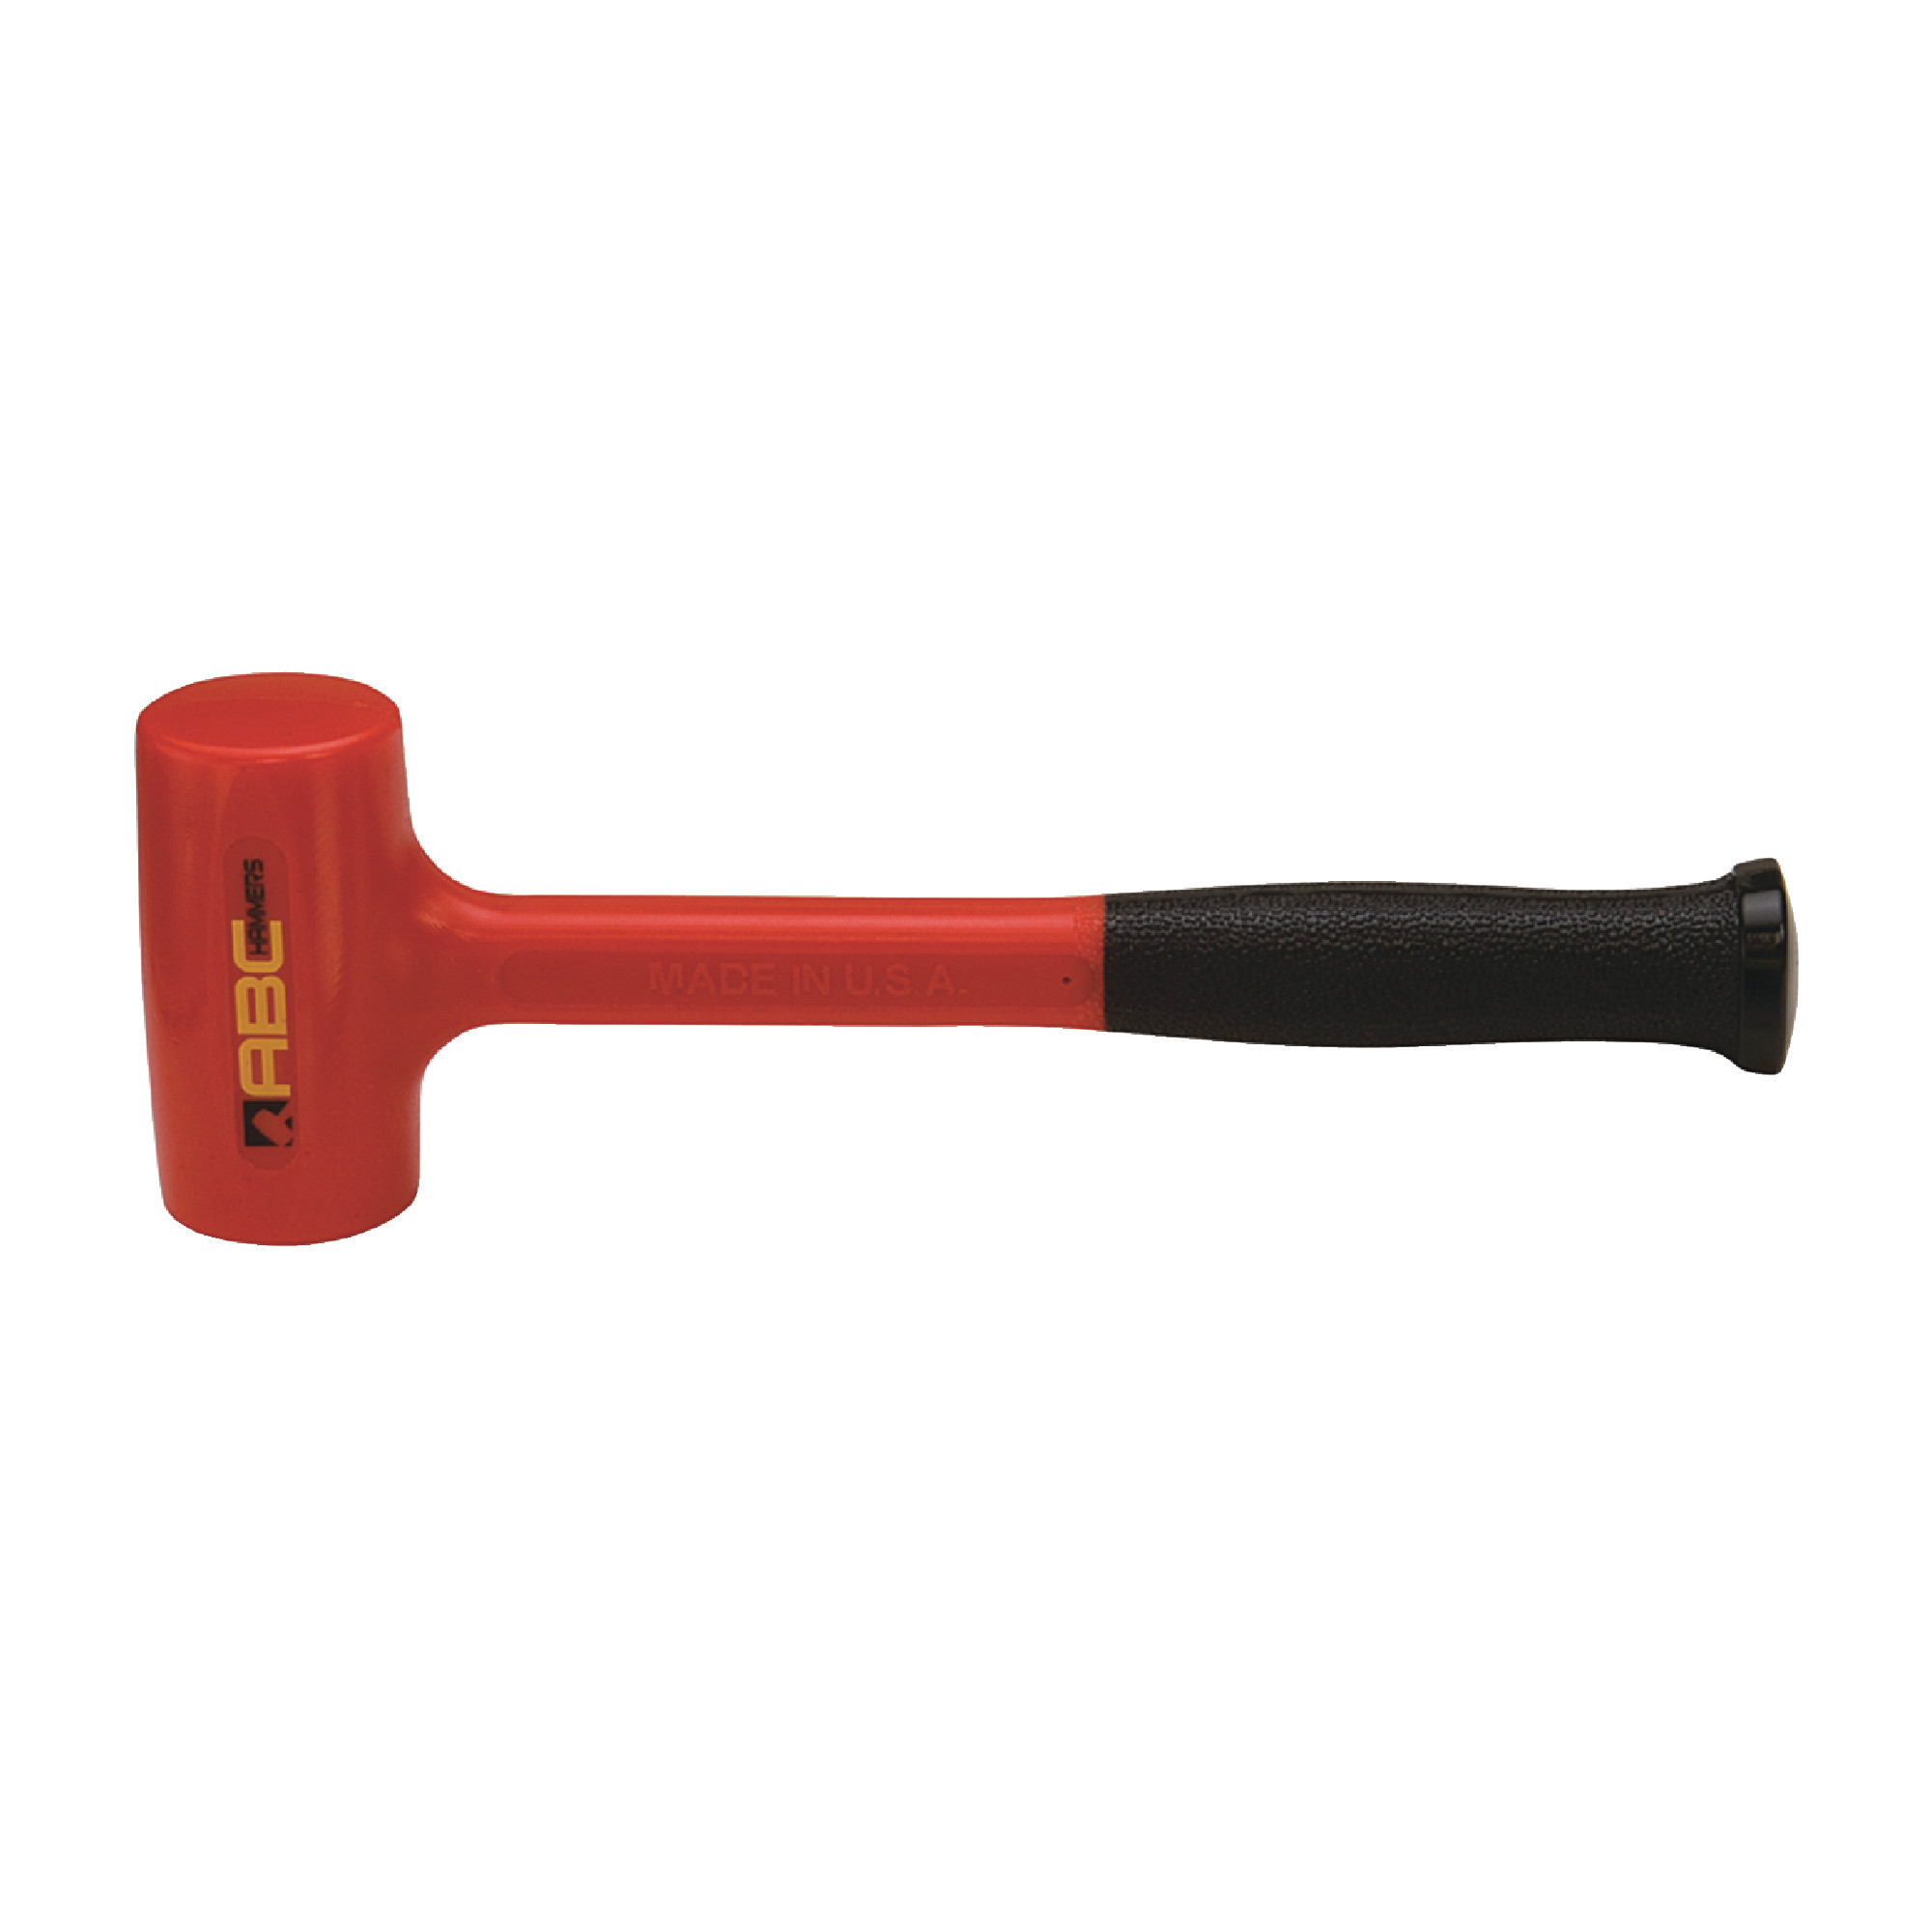 26 oz. Polyurethane Dead Blow Hammer, Overall Length 12.75"